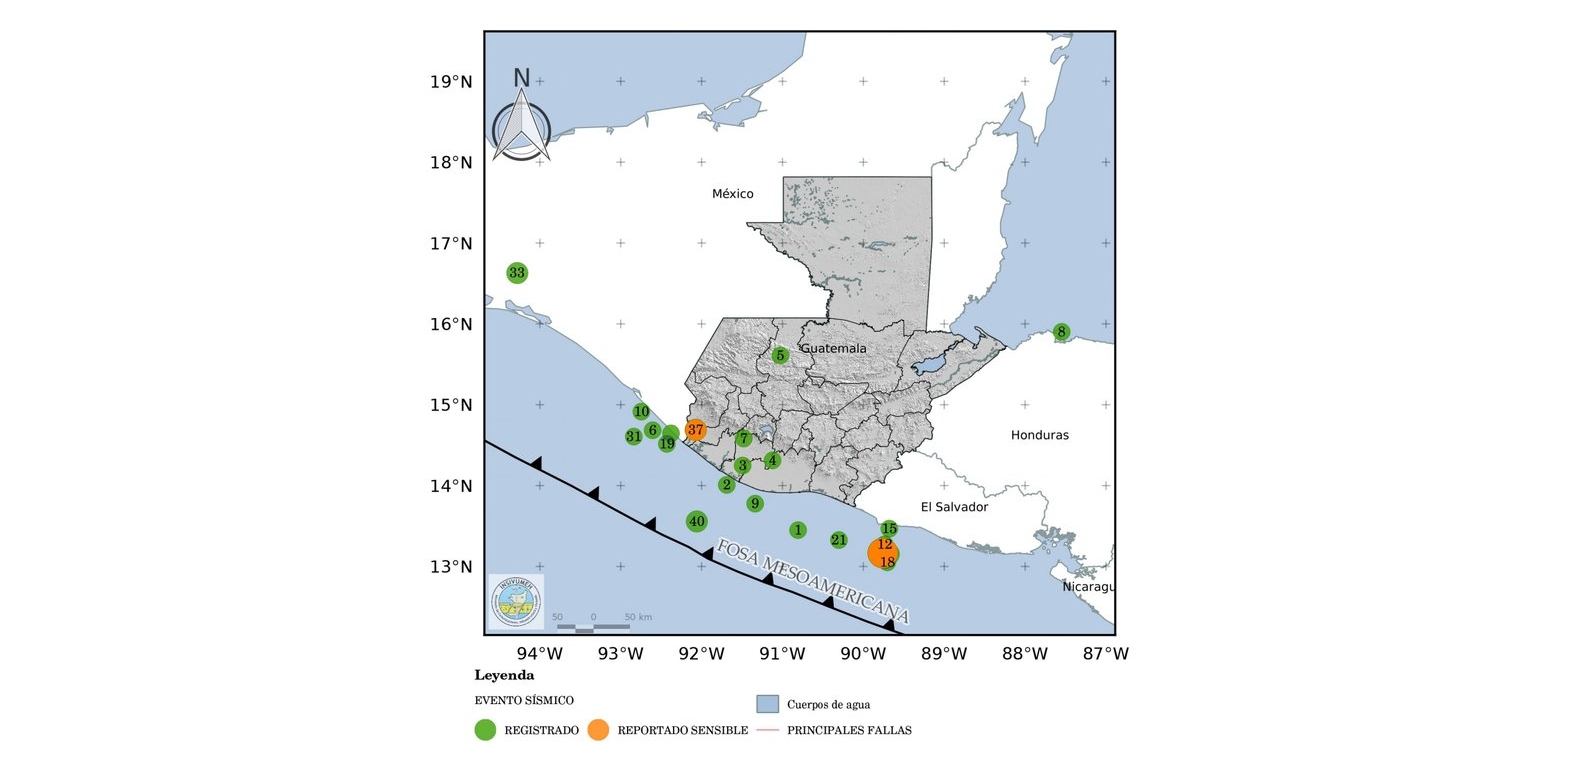 Temblores en Guatemala